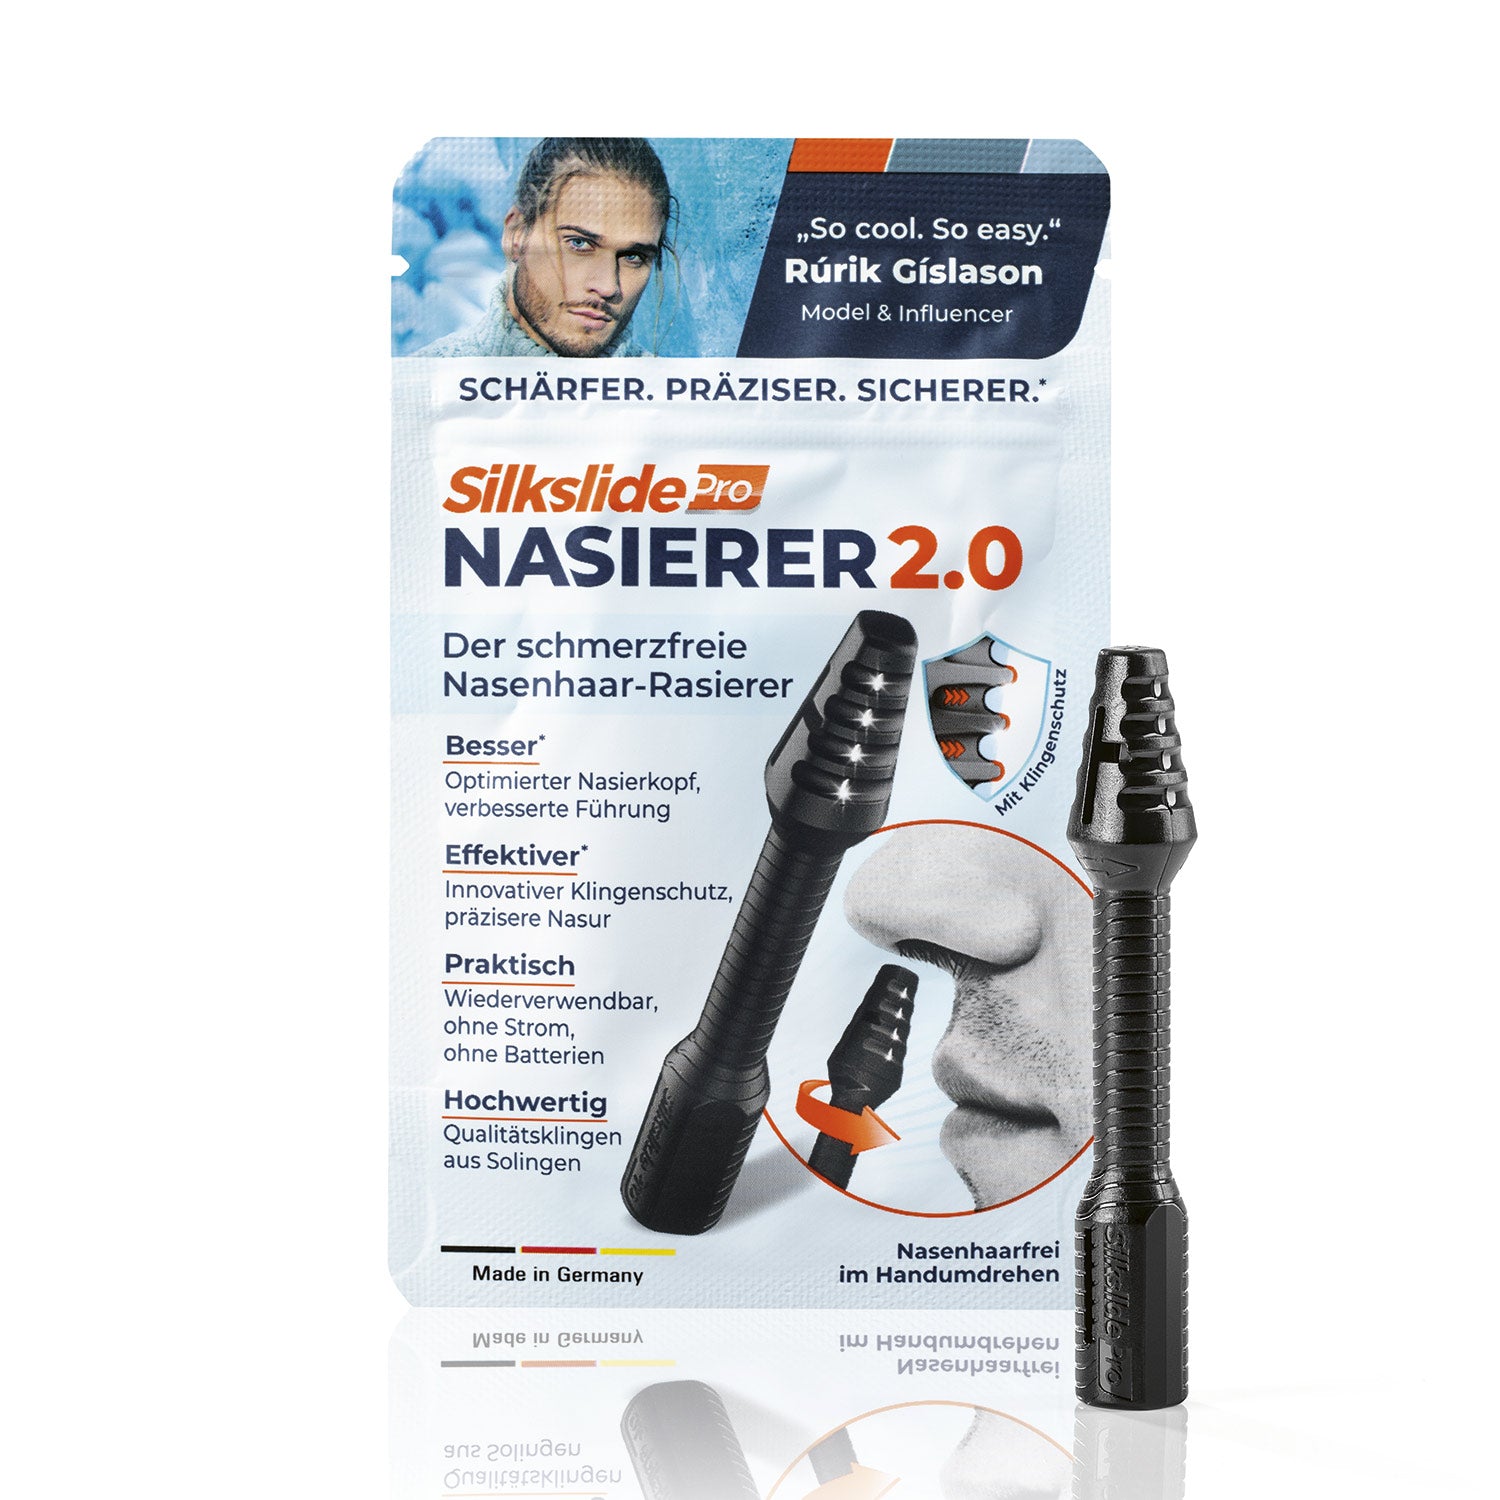 Nasenhaartrimmer - Nasierer 2.0